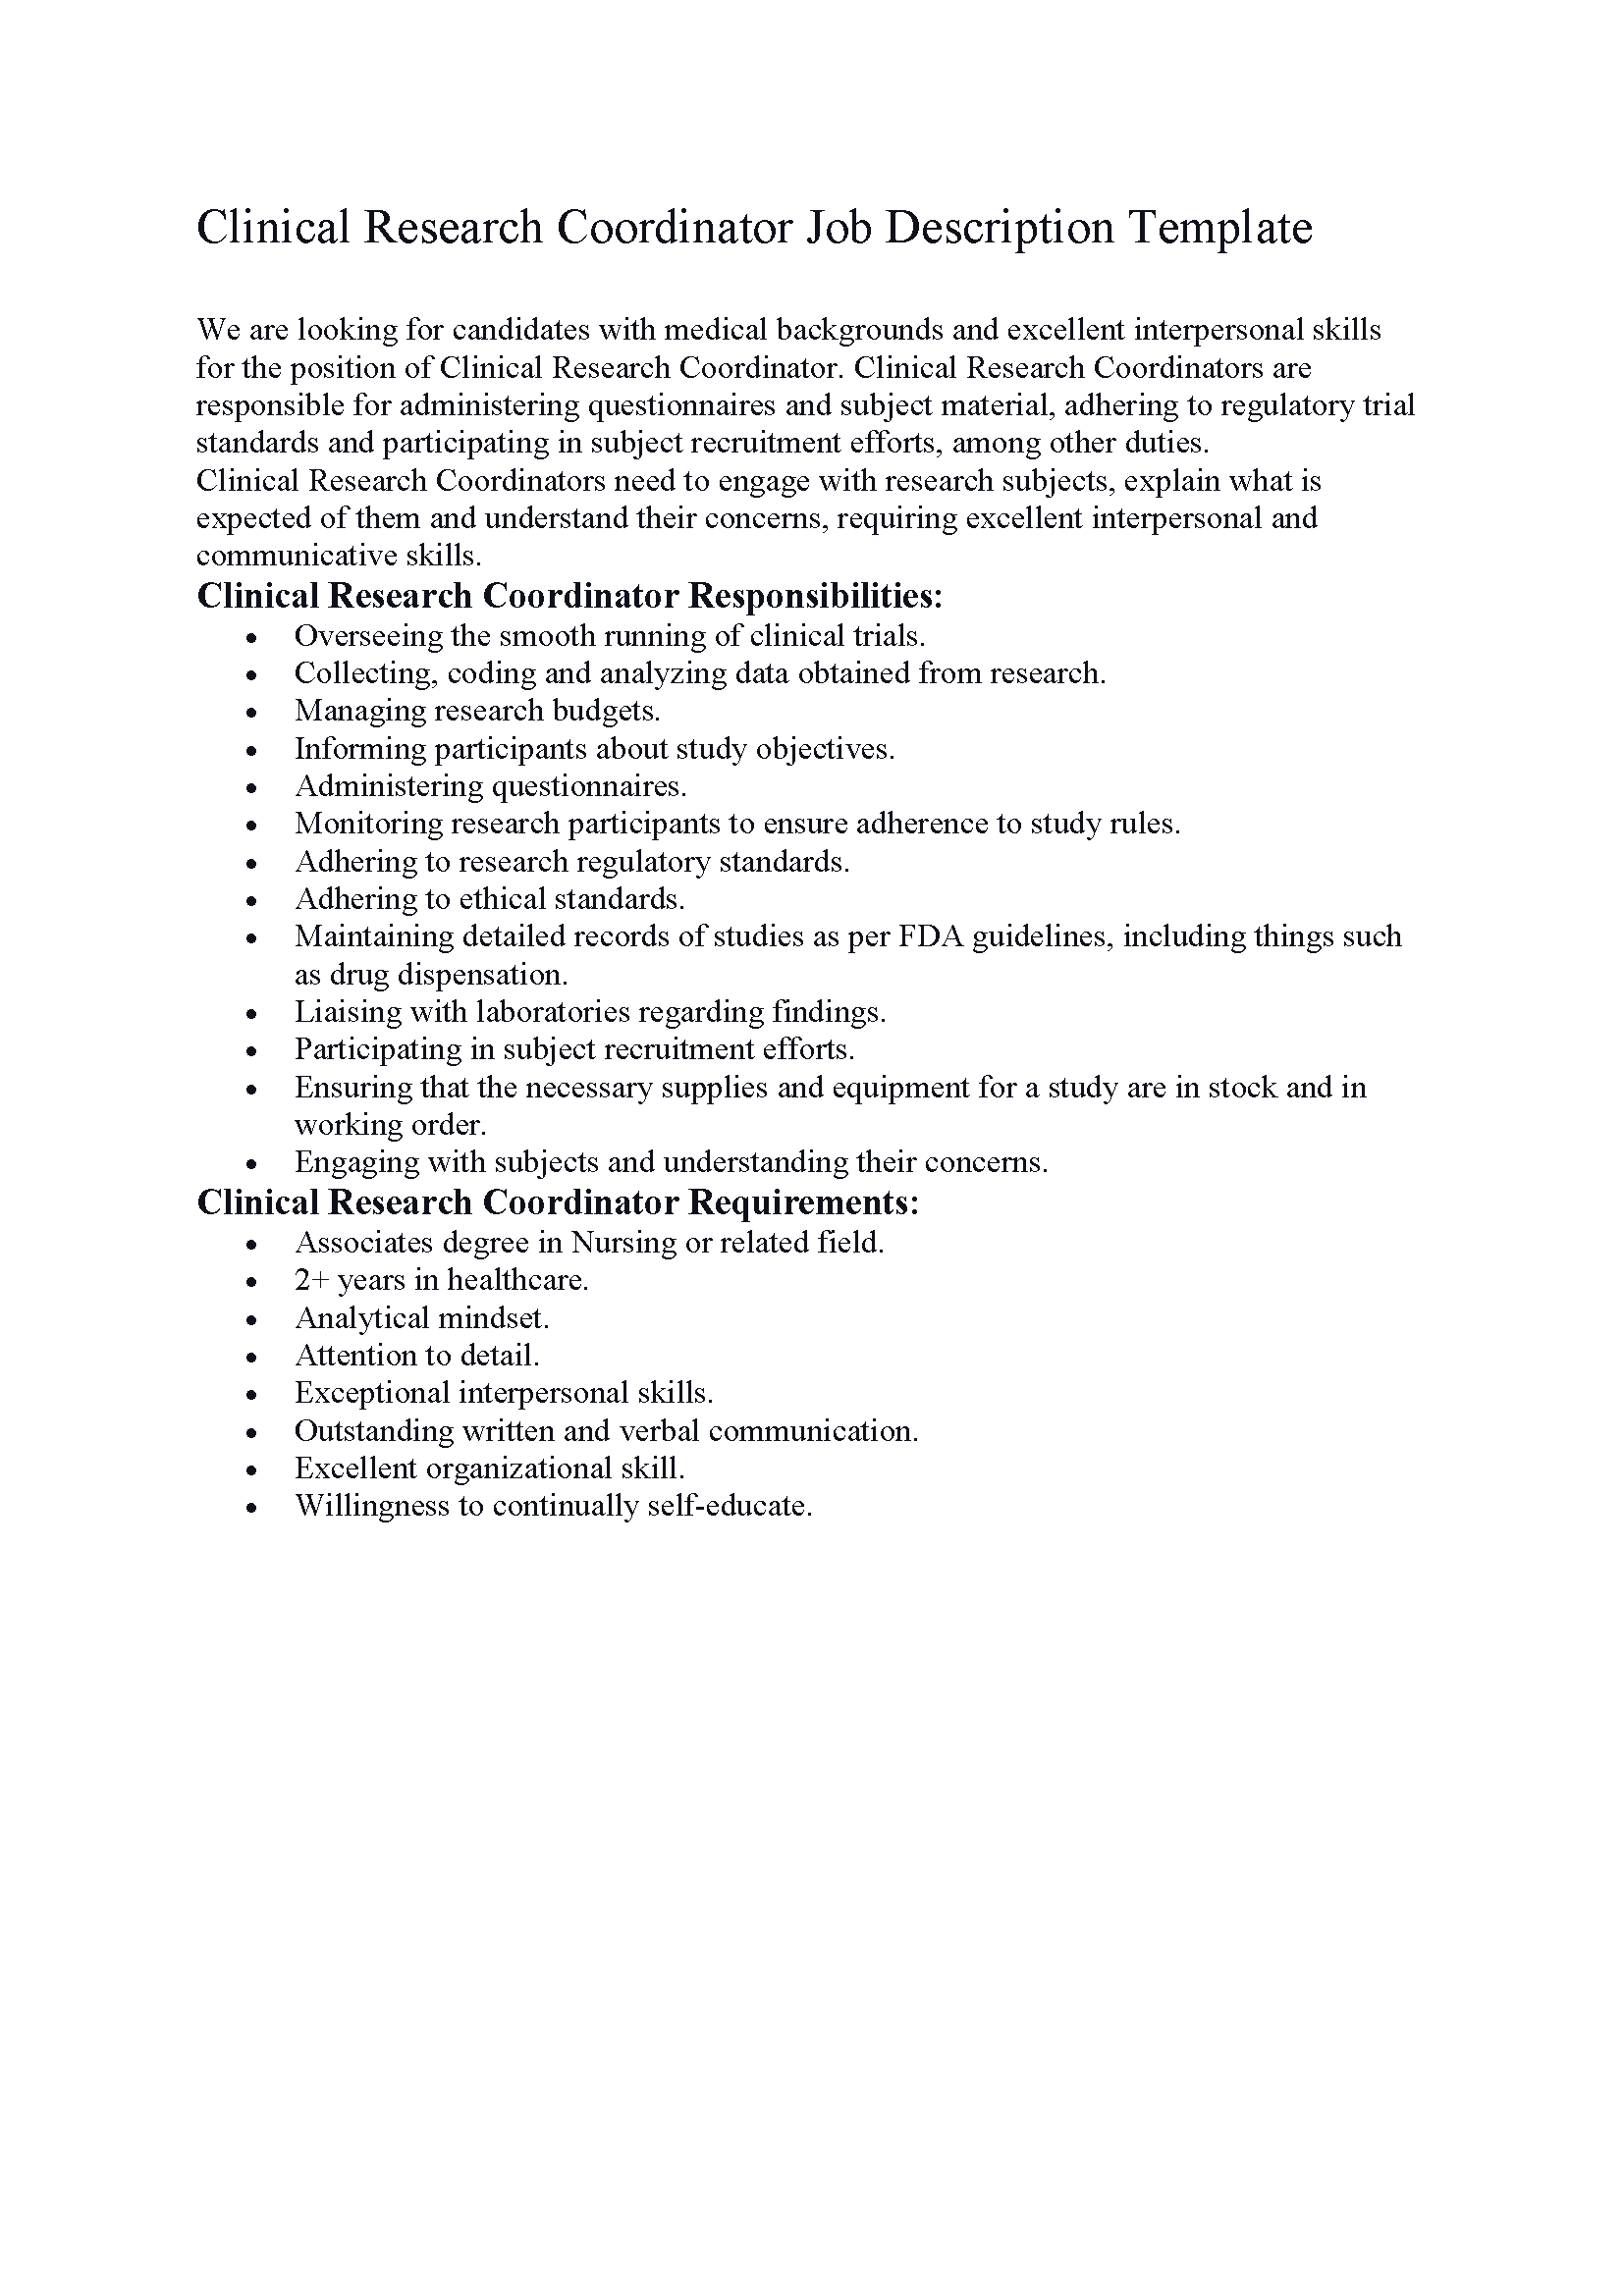 Clinical Research Coordinator Job Description Template